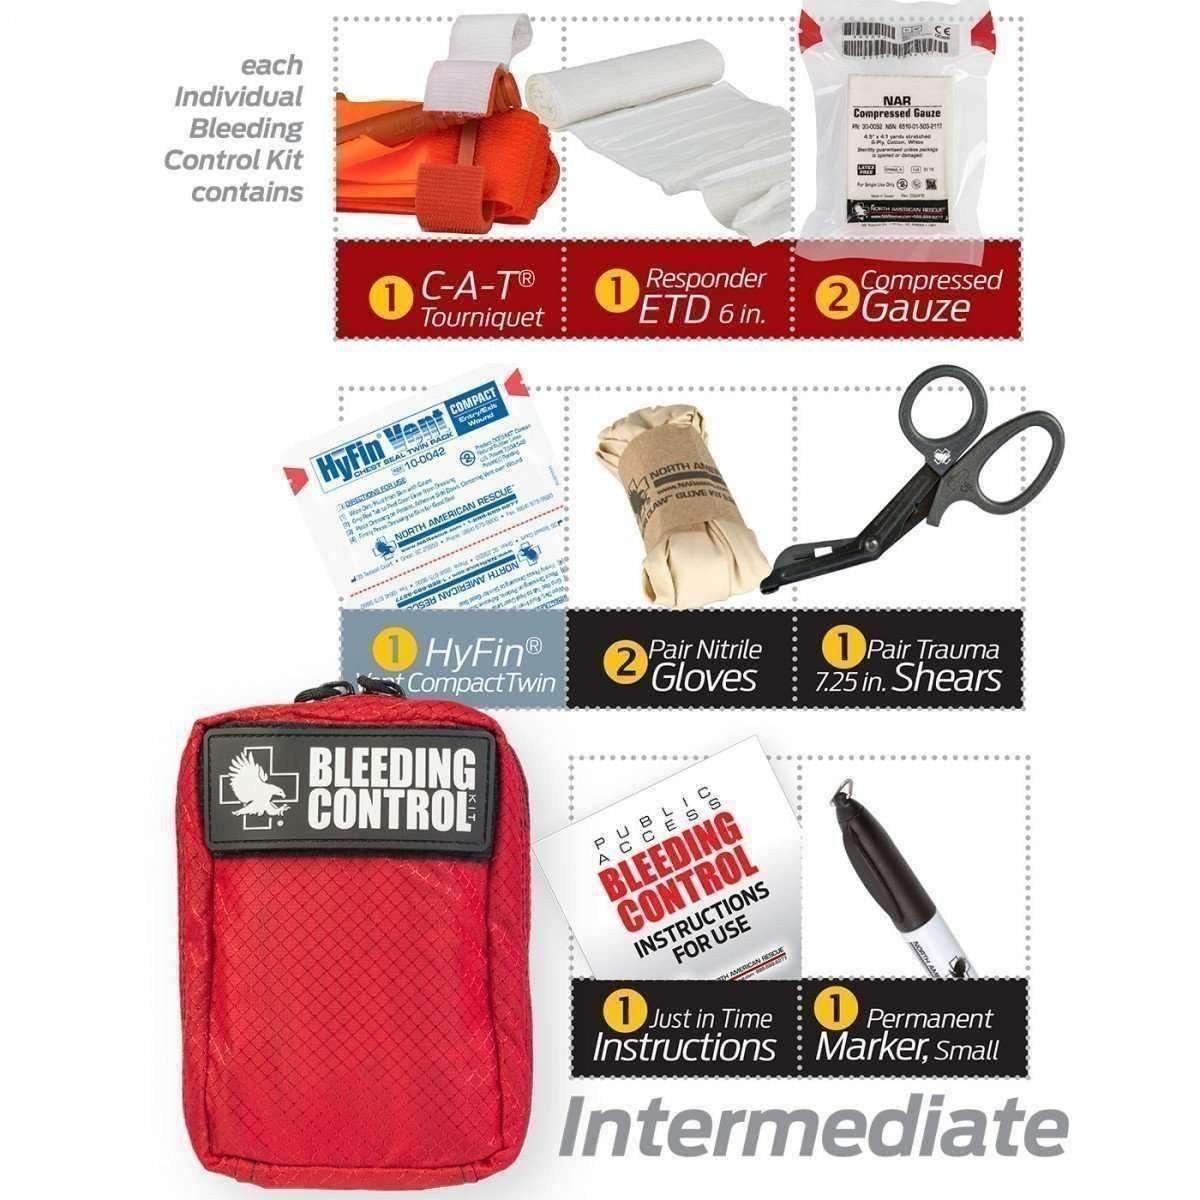 Public Access Bleeding Control Kit - Nylon - Vendor